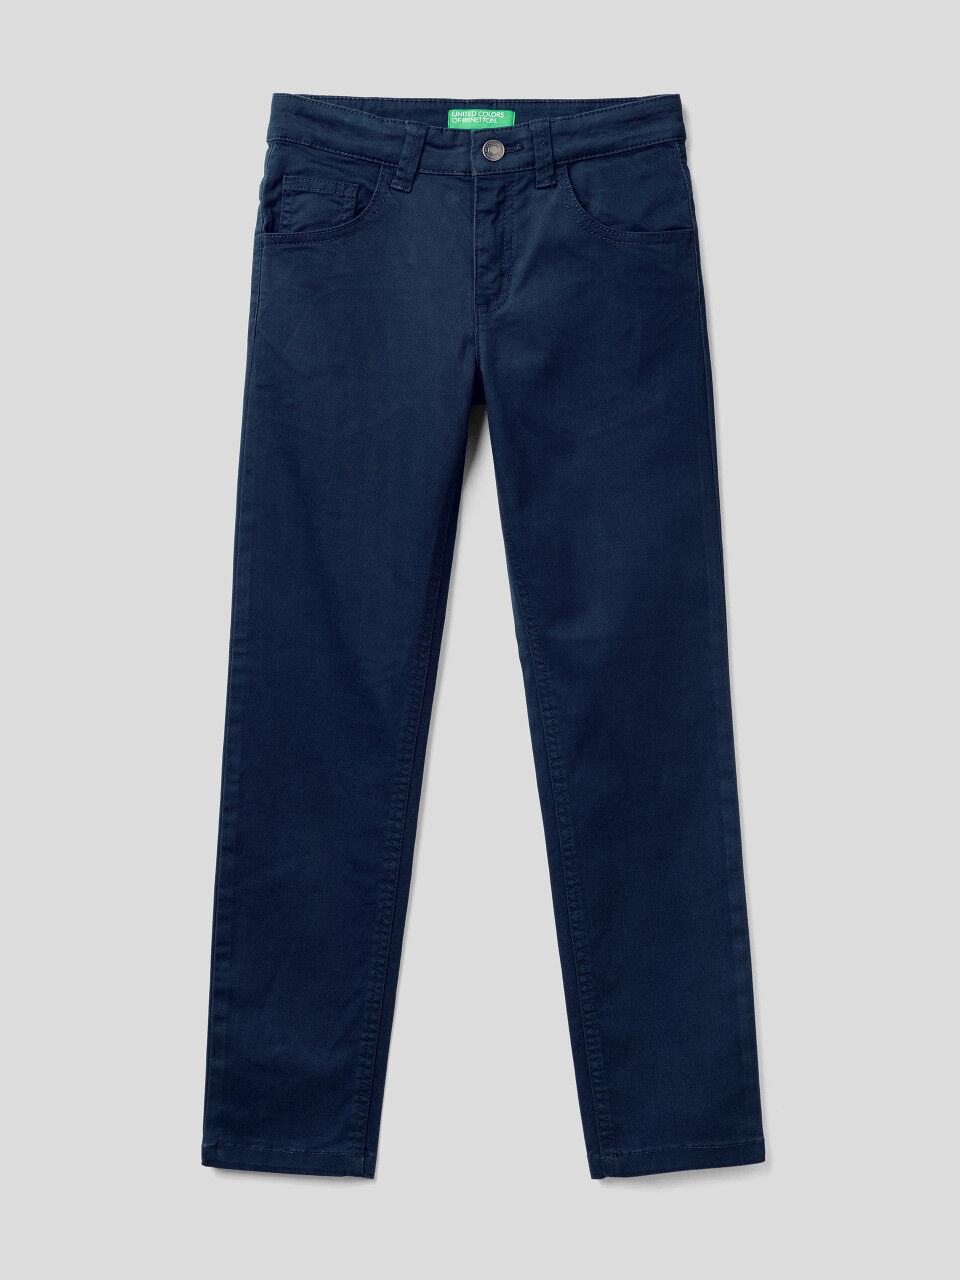 Pantaloni Bambino, United Colors of Benetton Trousers 